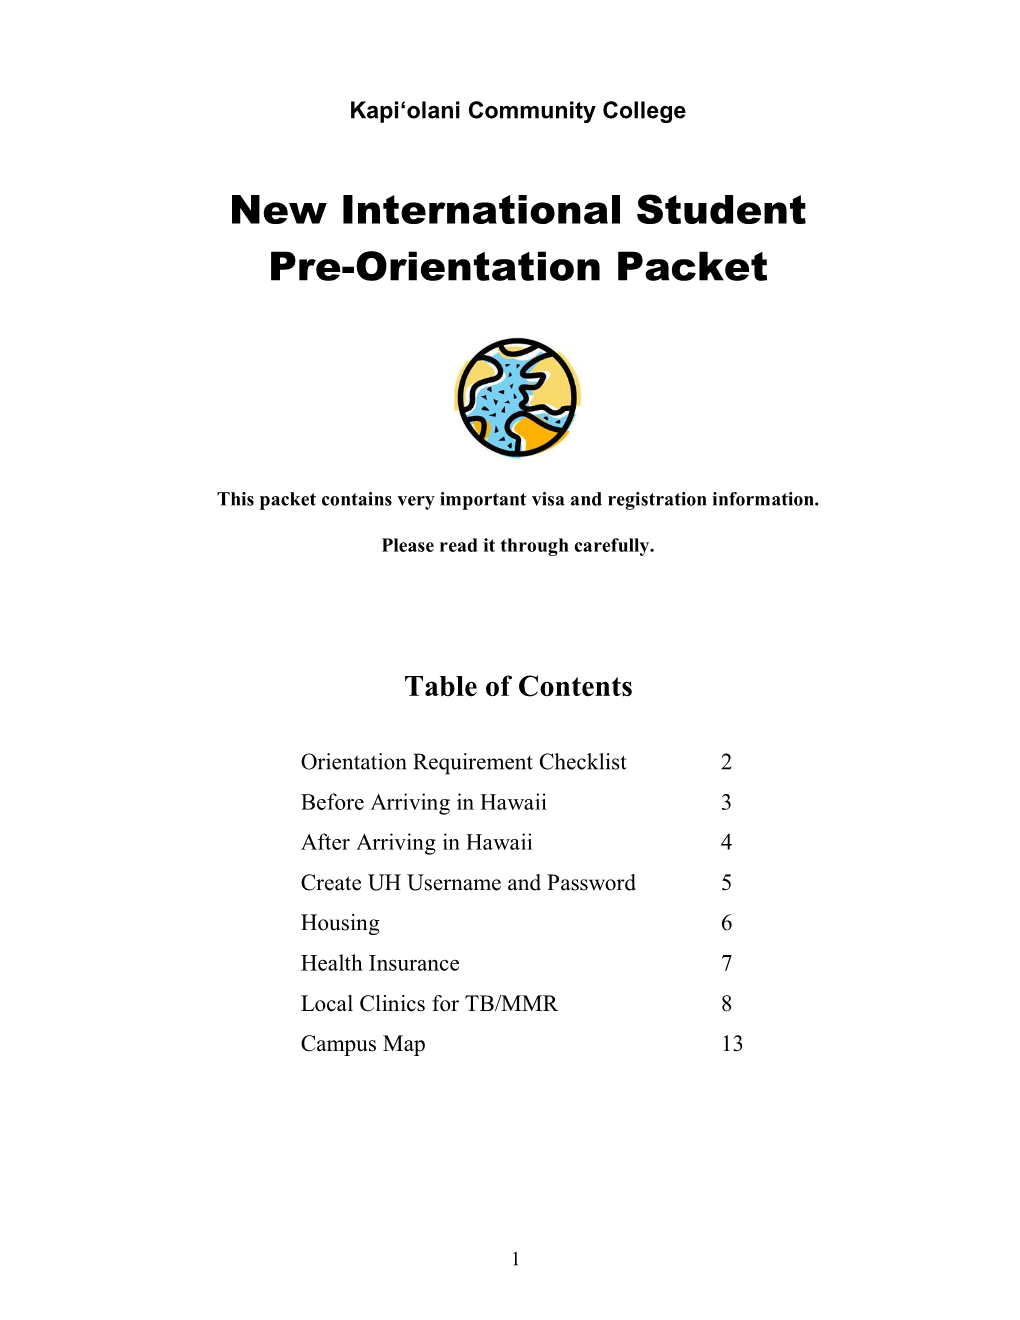 New International Student Pre-Orientation Packet